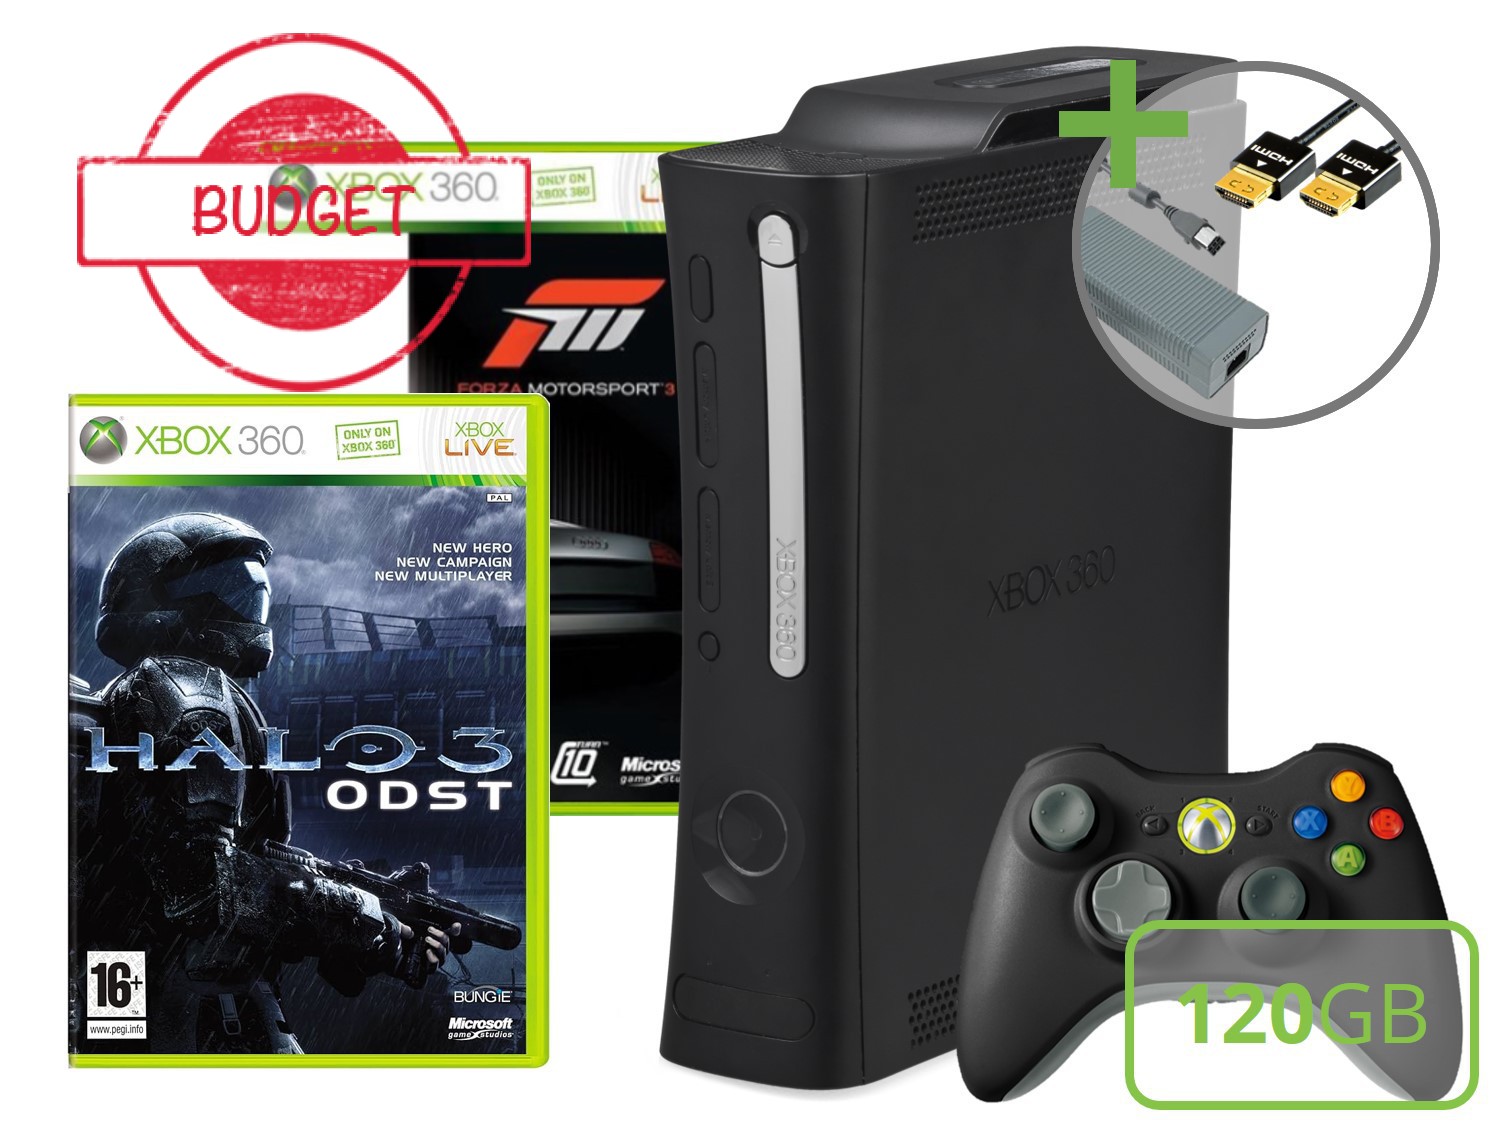 Microsoft Xbox 360 Elite Starter Pack - Forza Motorsport 3 and Halo 3: ODST Edition - Budget - Xbox 360 Hardware